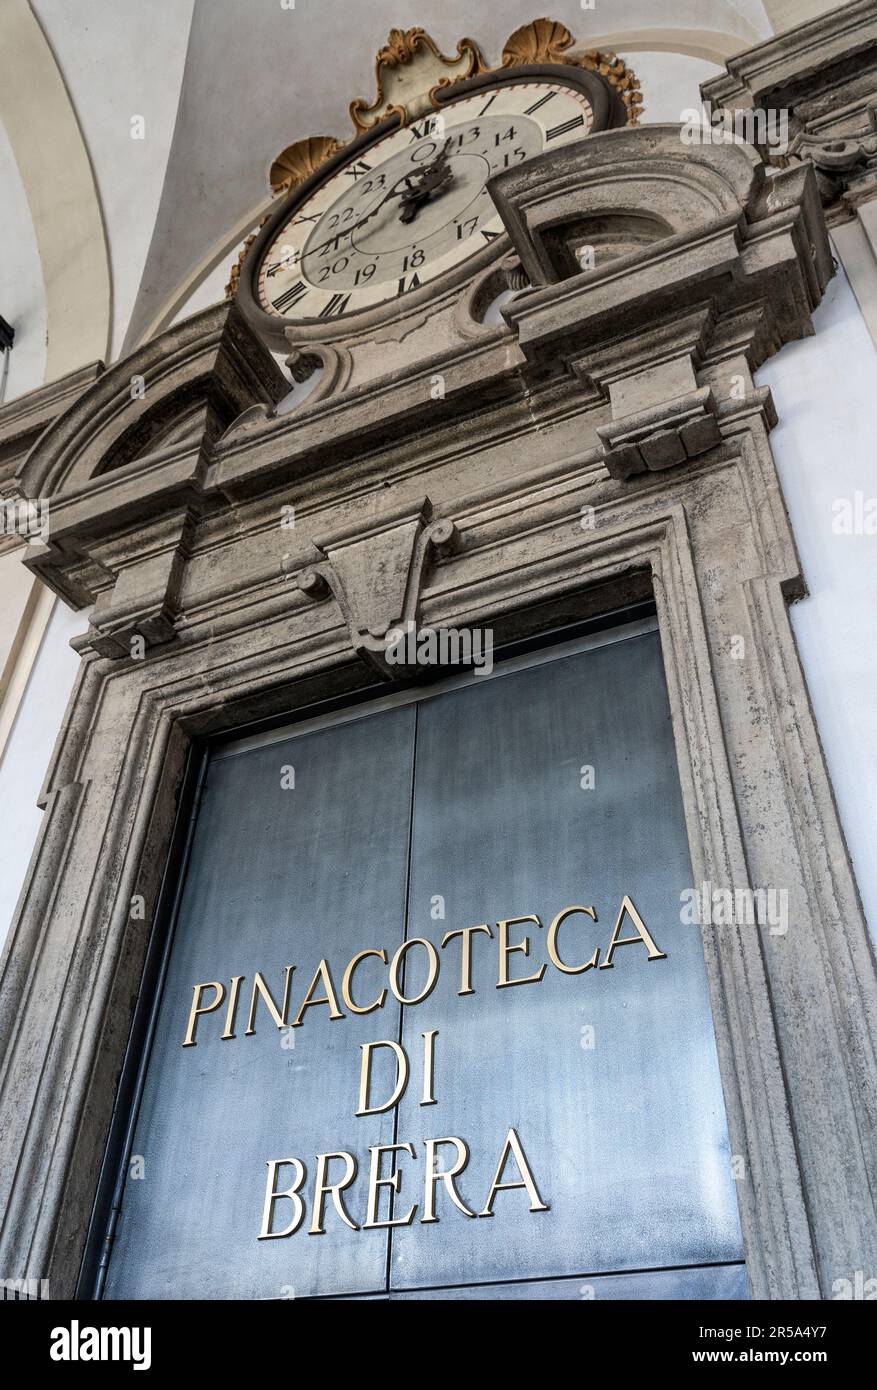 A sign meaning 'Pinacoteca di Brera' above the entrance of Brera art gallery, Milano city center, Italy Stock Photo